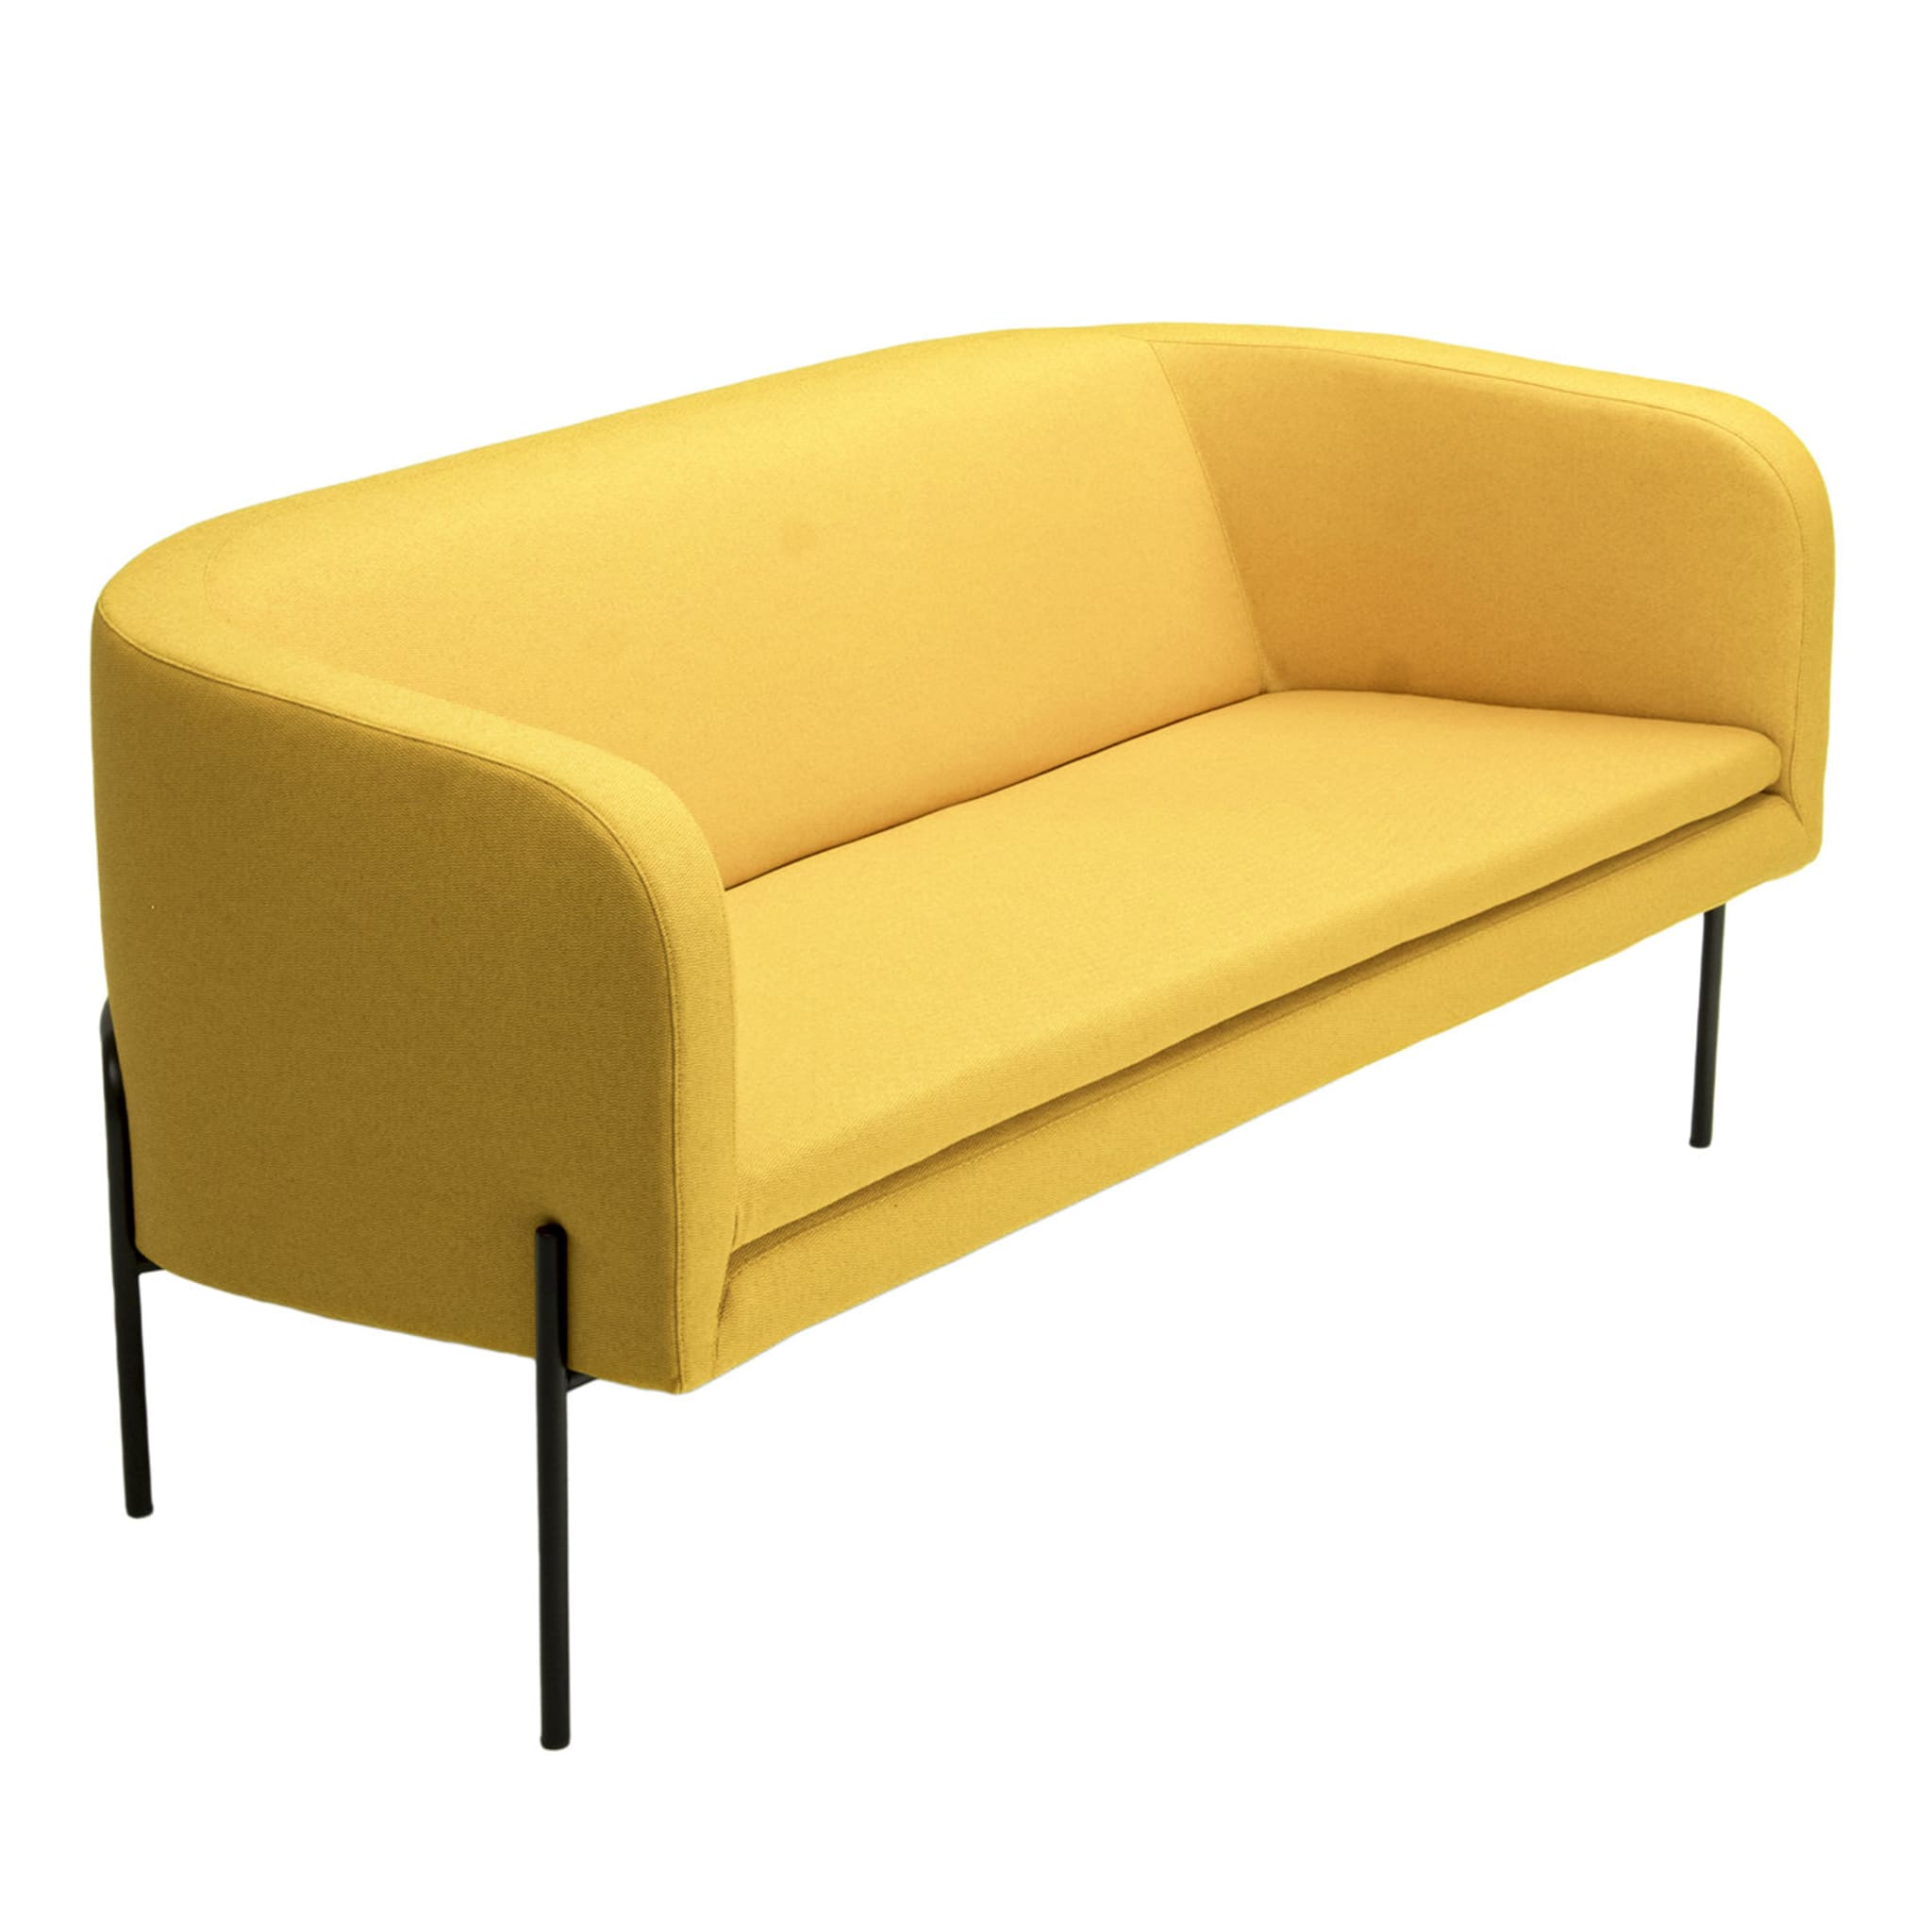 Laetitia Yellow 2-Seater Armchair by Fabio Fantolino - Main view